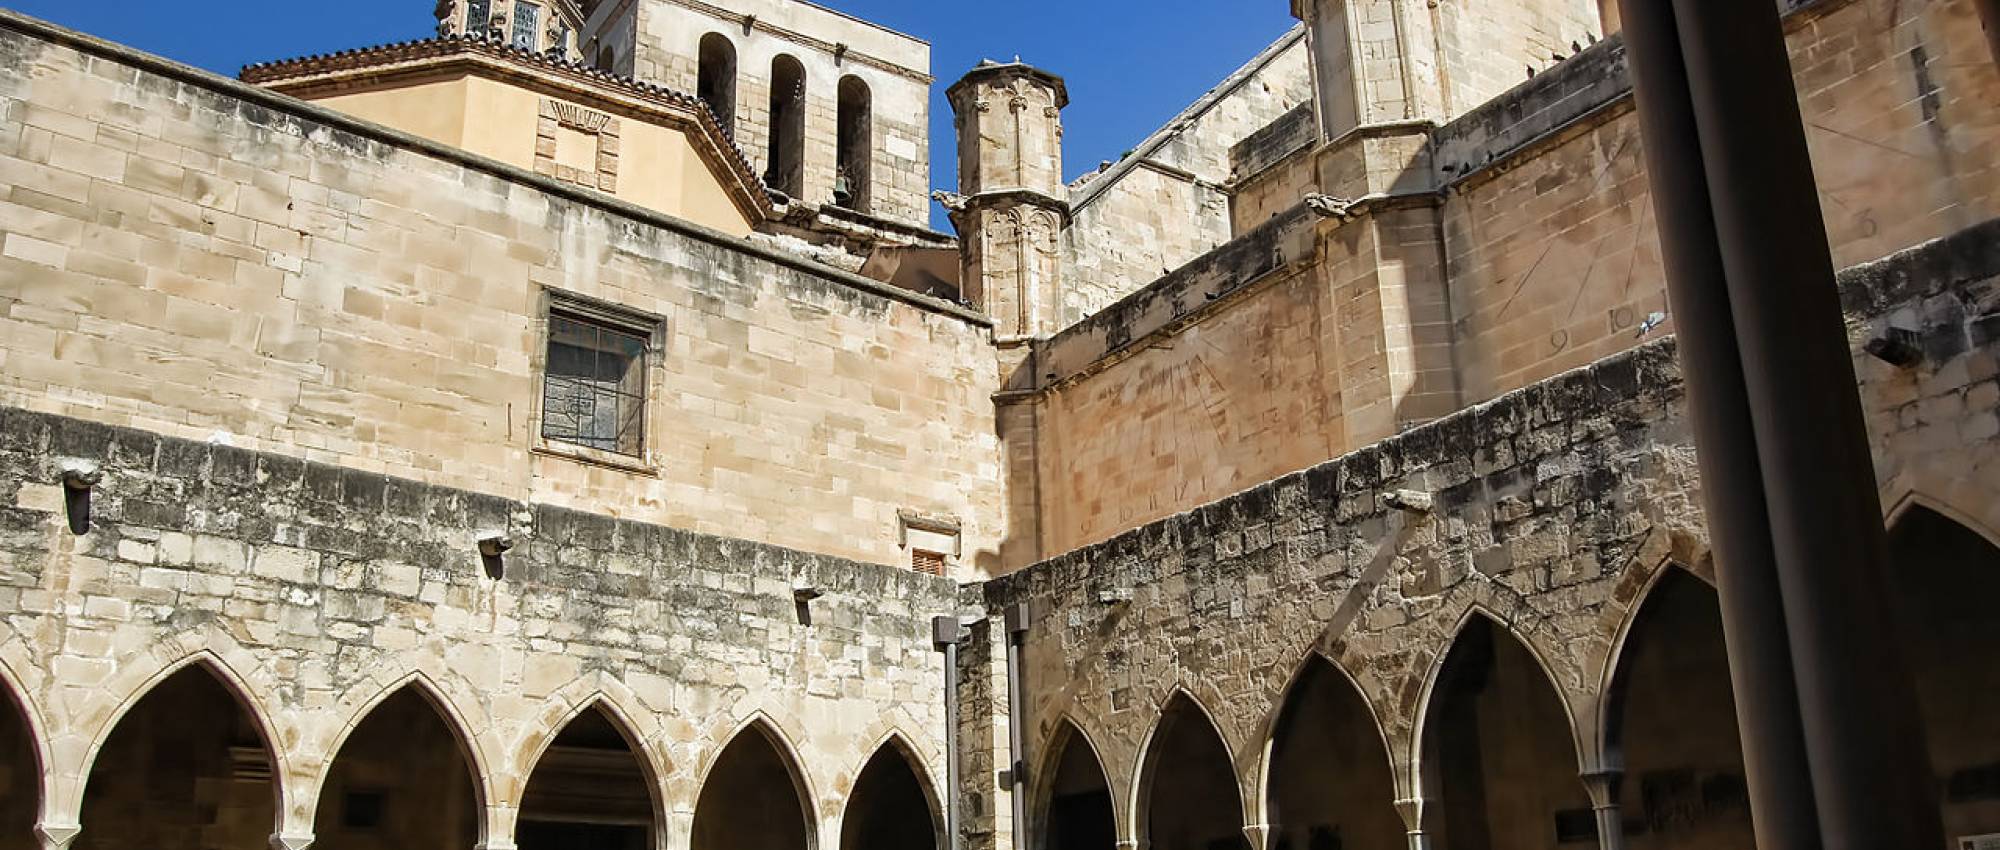 Claustre de la catedral de Sta. Maria de Tortosa. Carme Ribes Moreno / Wikimedia Commons. CC BY-SA 3.0